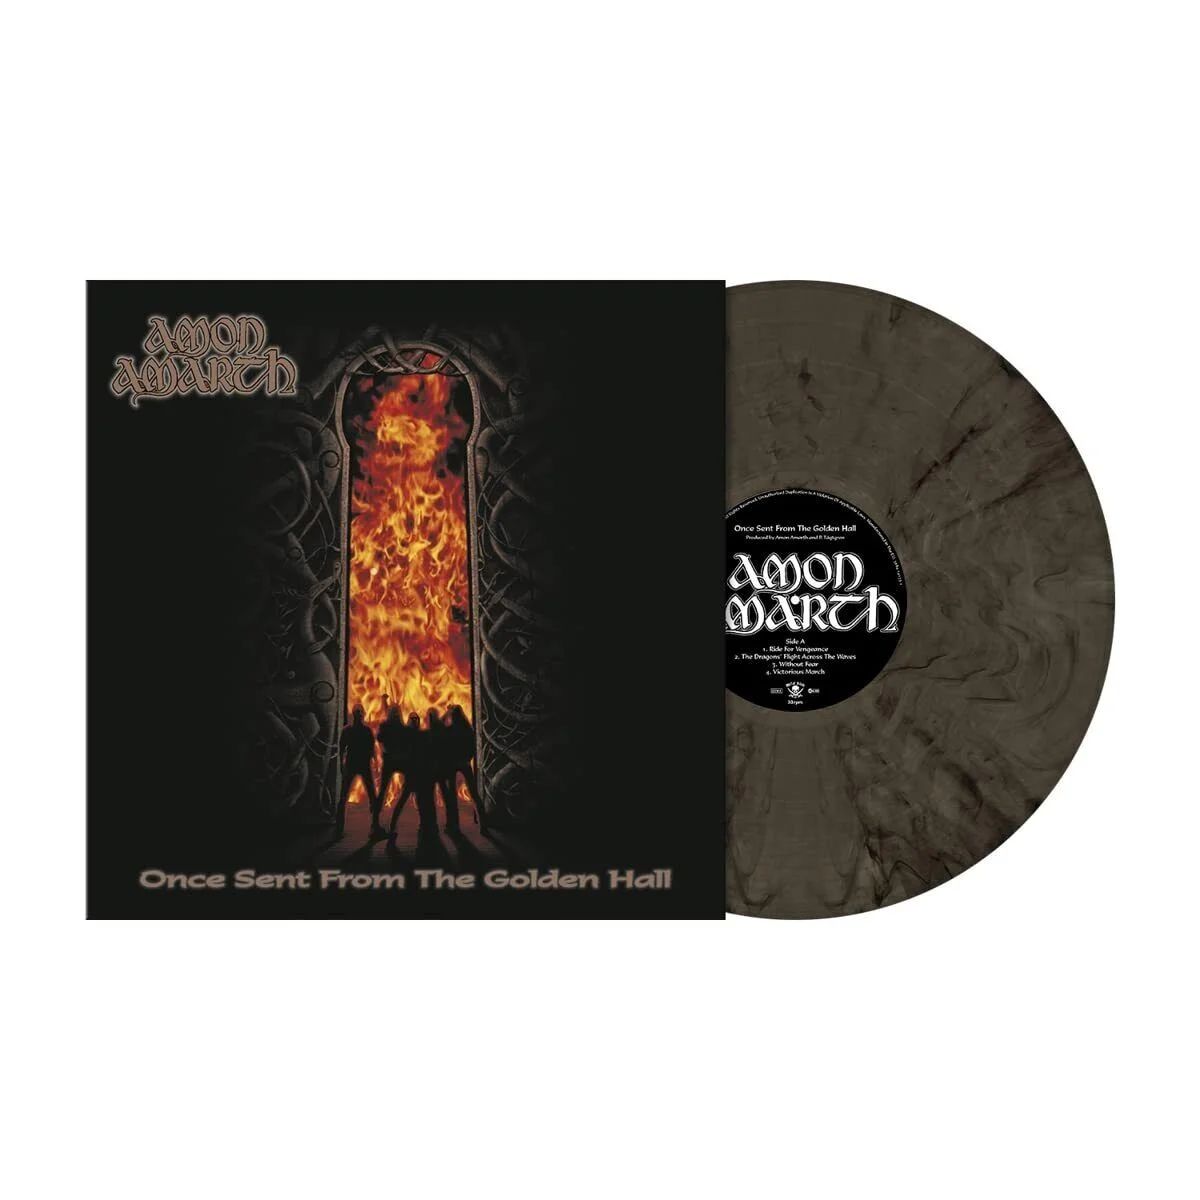 Виниловая пластинка Amon Amarth, Once Sent From The Golden Hall (coloured) (0039841413397) sony music lacuna coil black anima coloured vinyl lp cd